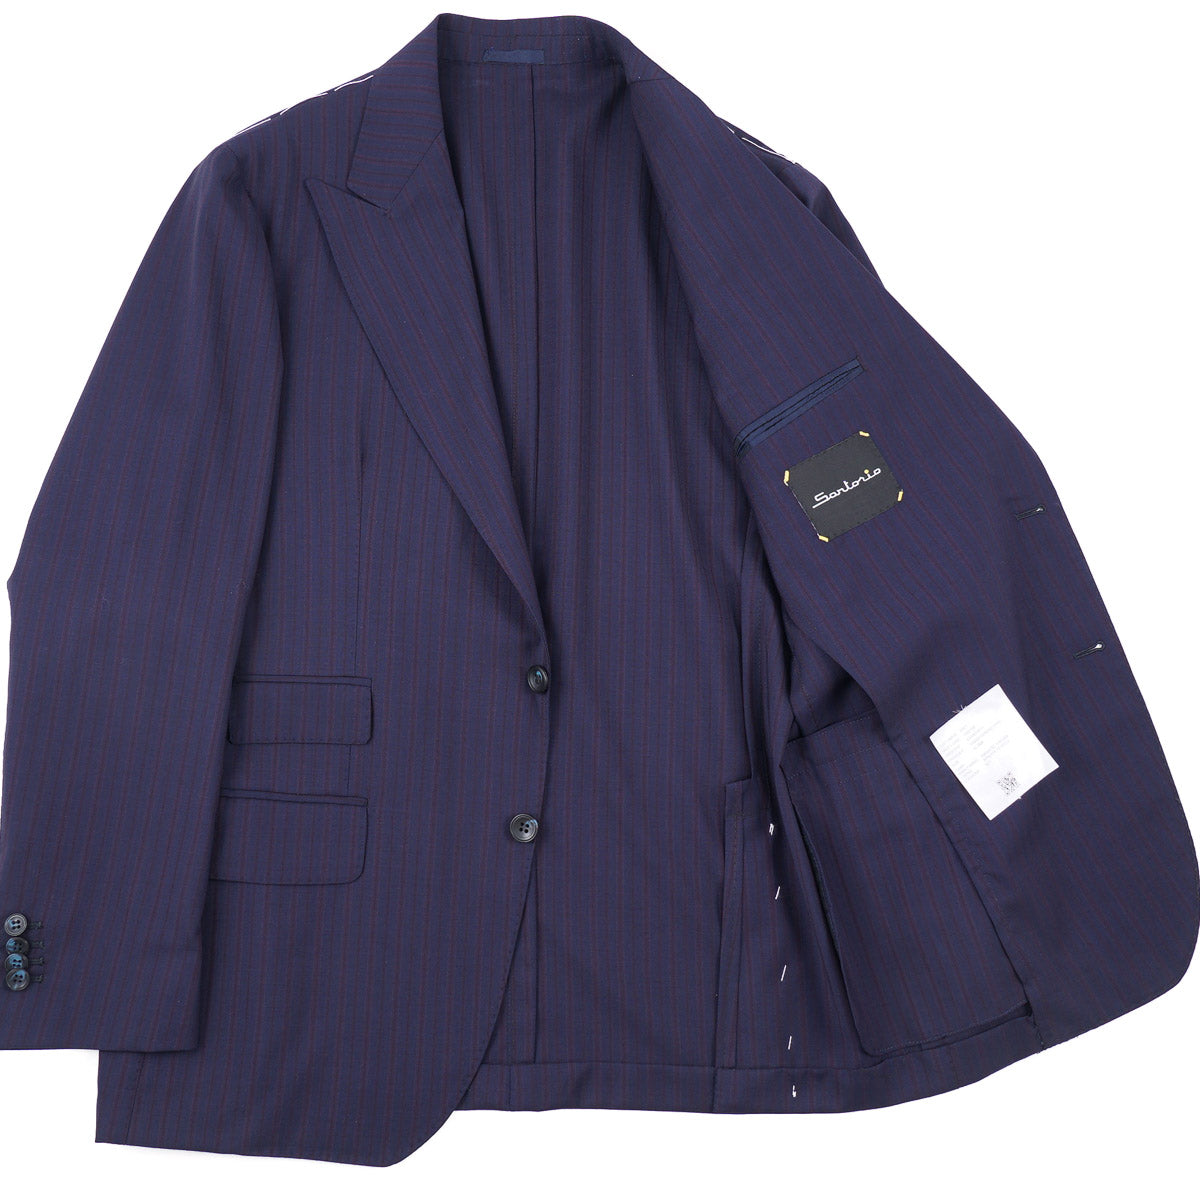 Sartorio Soft-Constructed Lightweight Wool Suit - Top Shelf Apparel